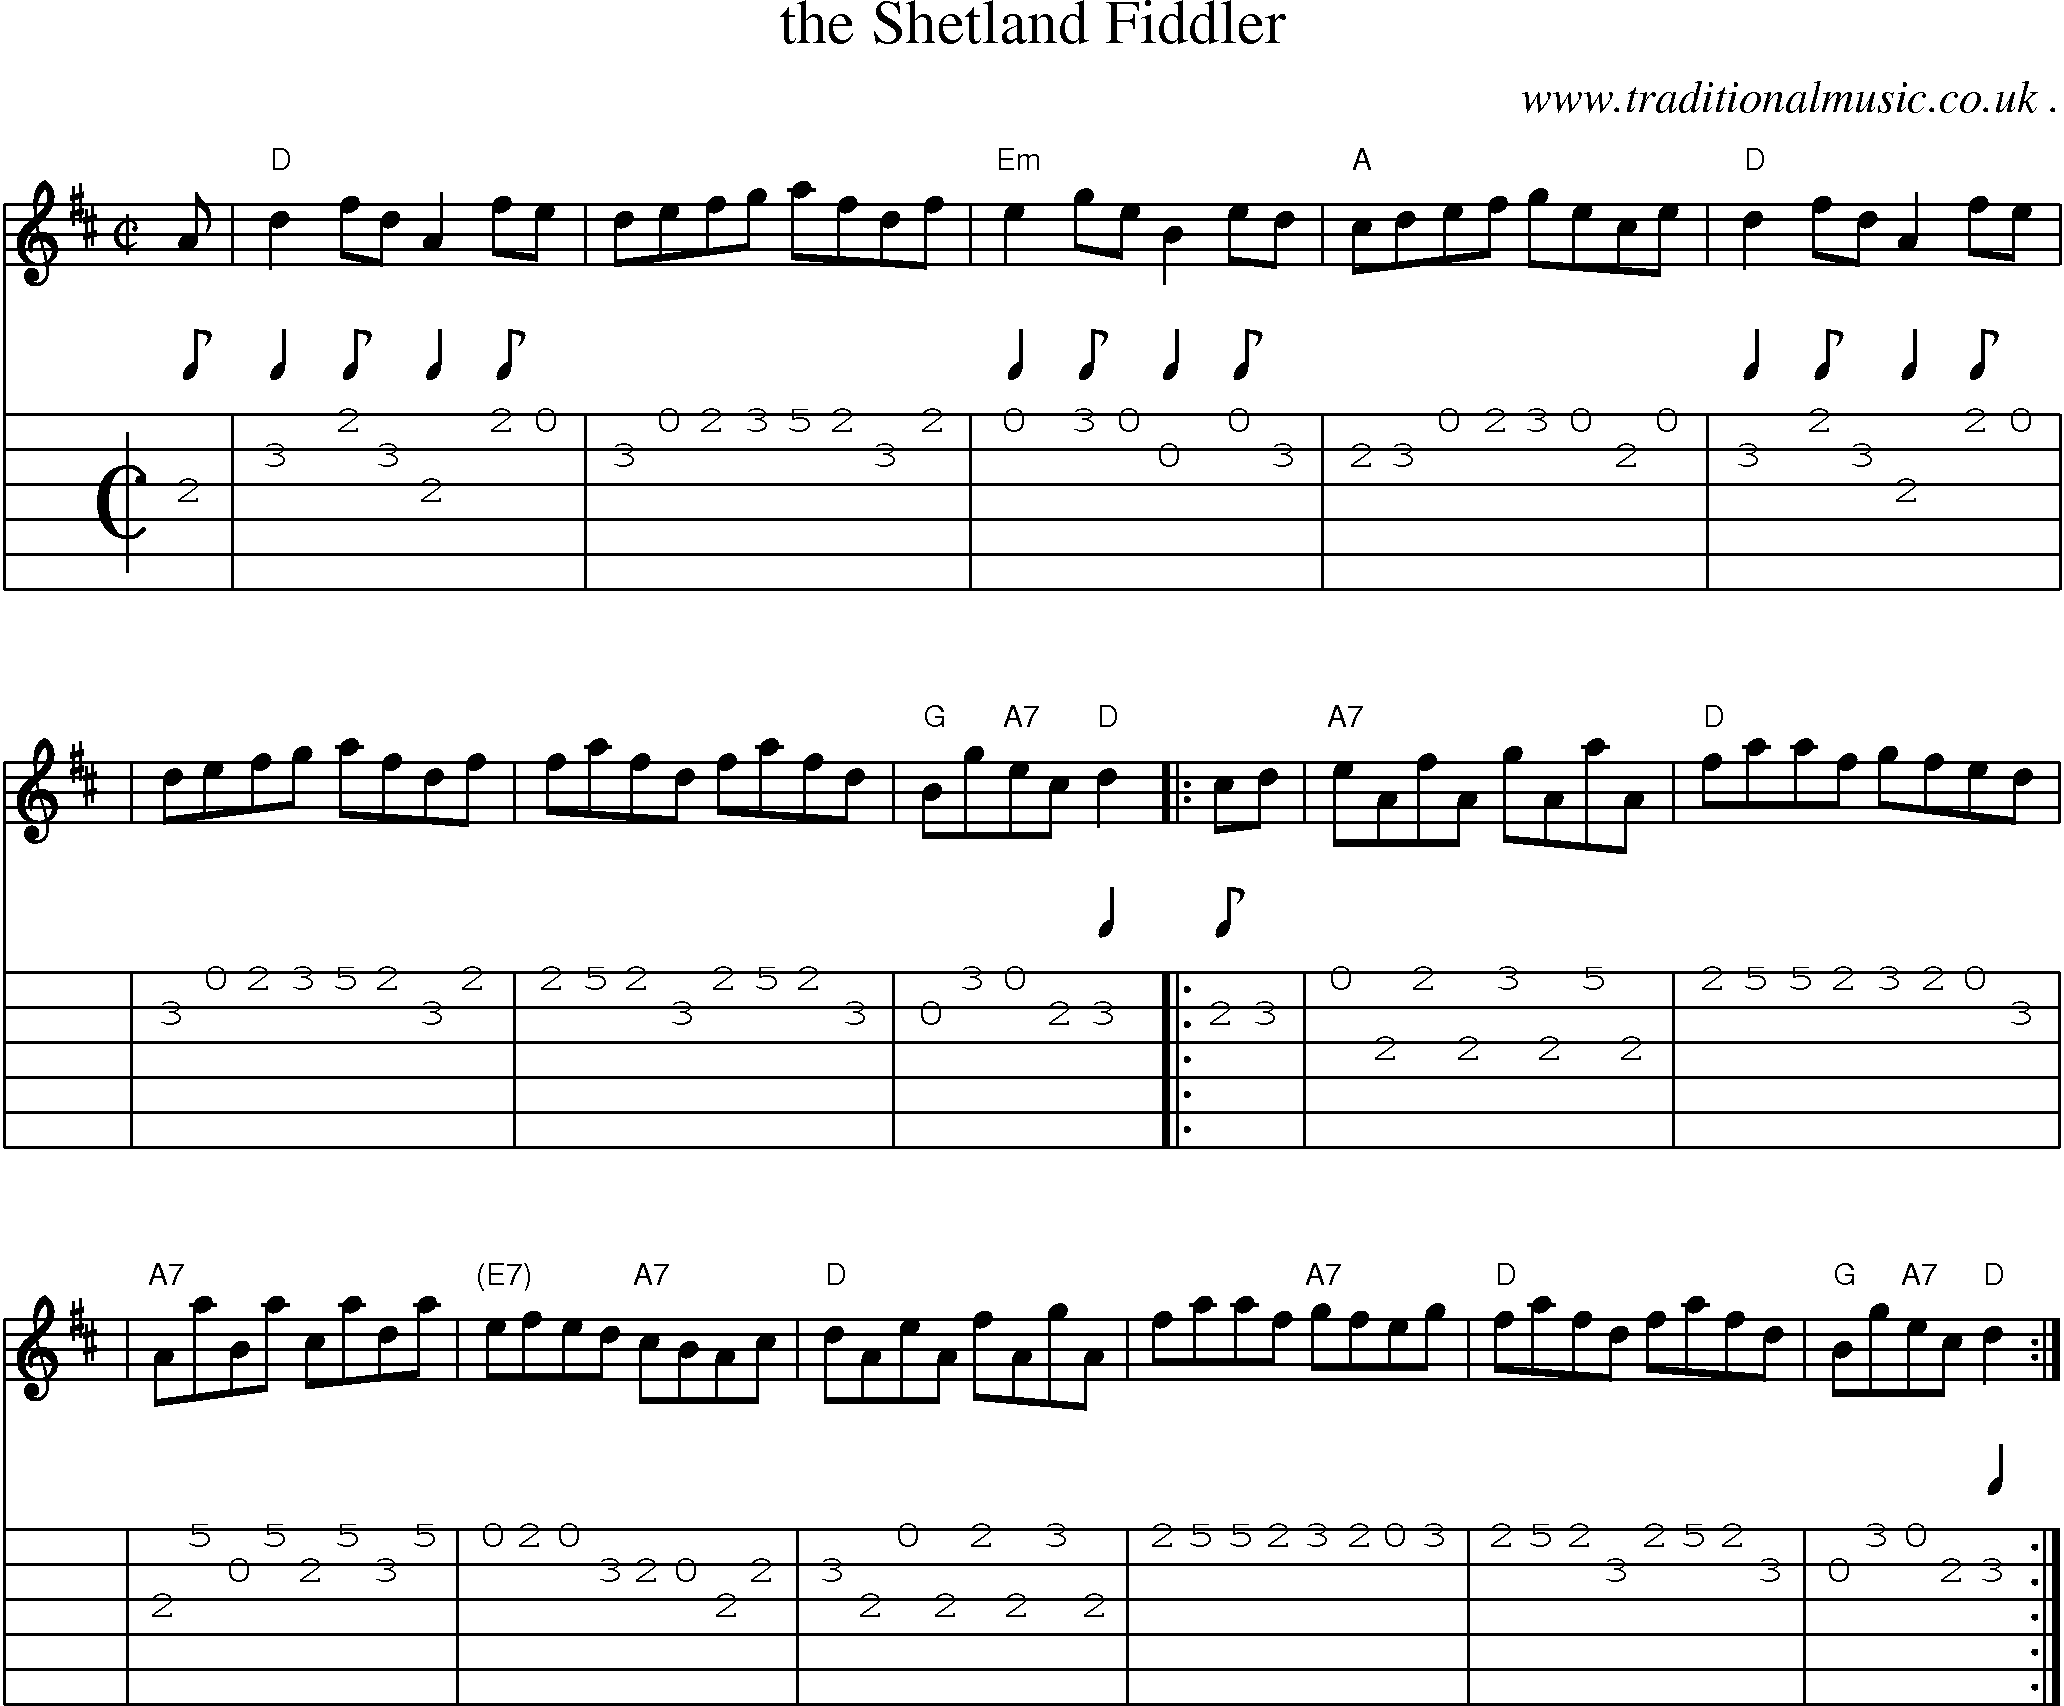 Sheet-music  score, Chords and Guitar Tabs for The Shetland Fiddler